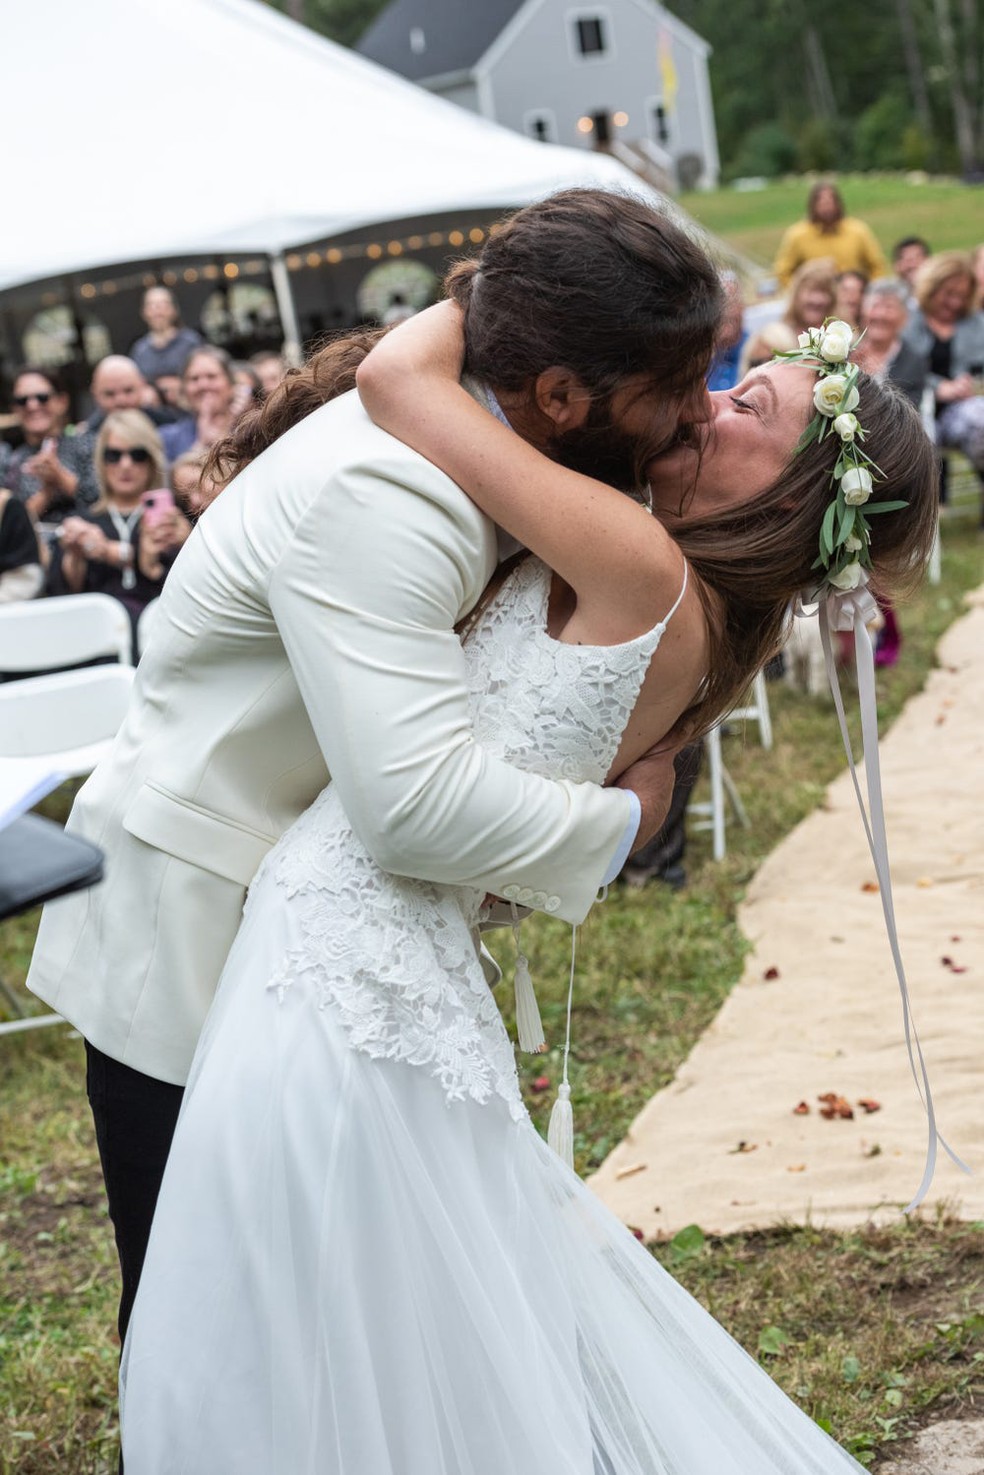 psicologiasdobrasil.com.br - Noiva usa vestido de casamento customizado para que noivo cego possa 'enxergar'